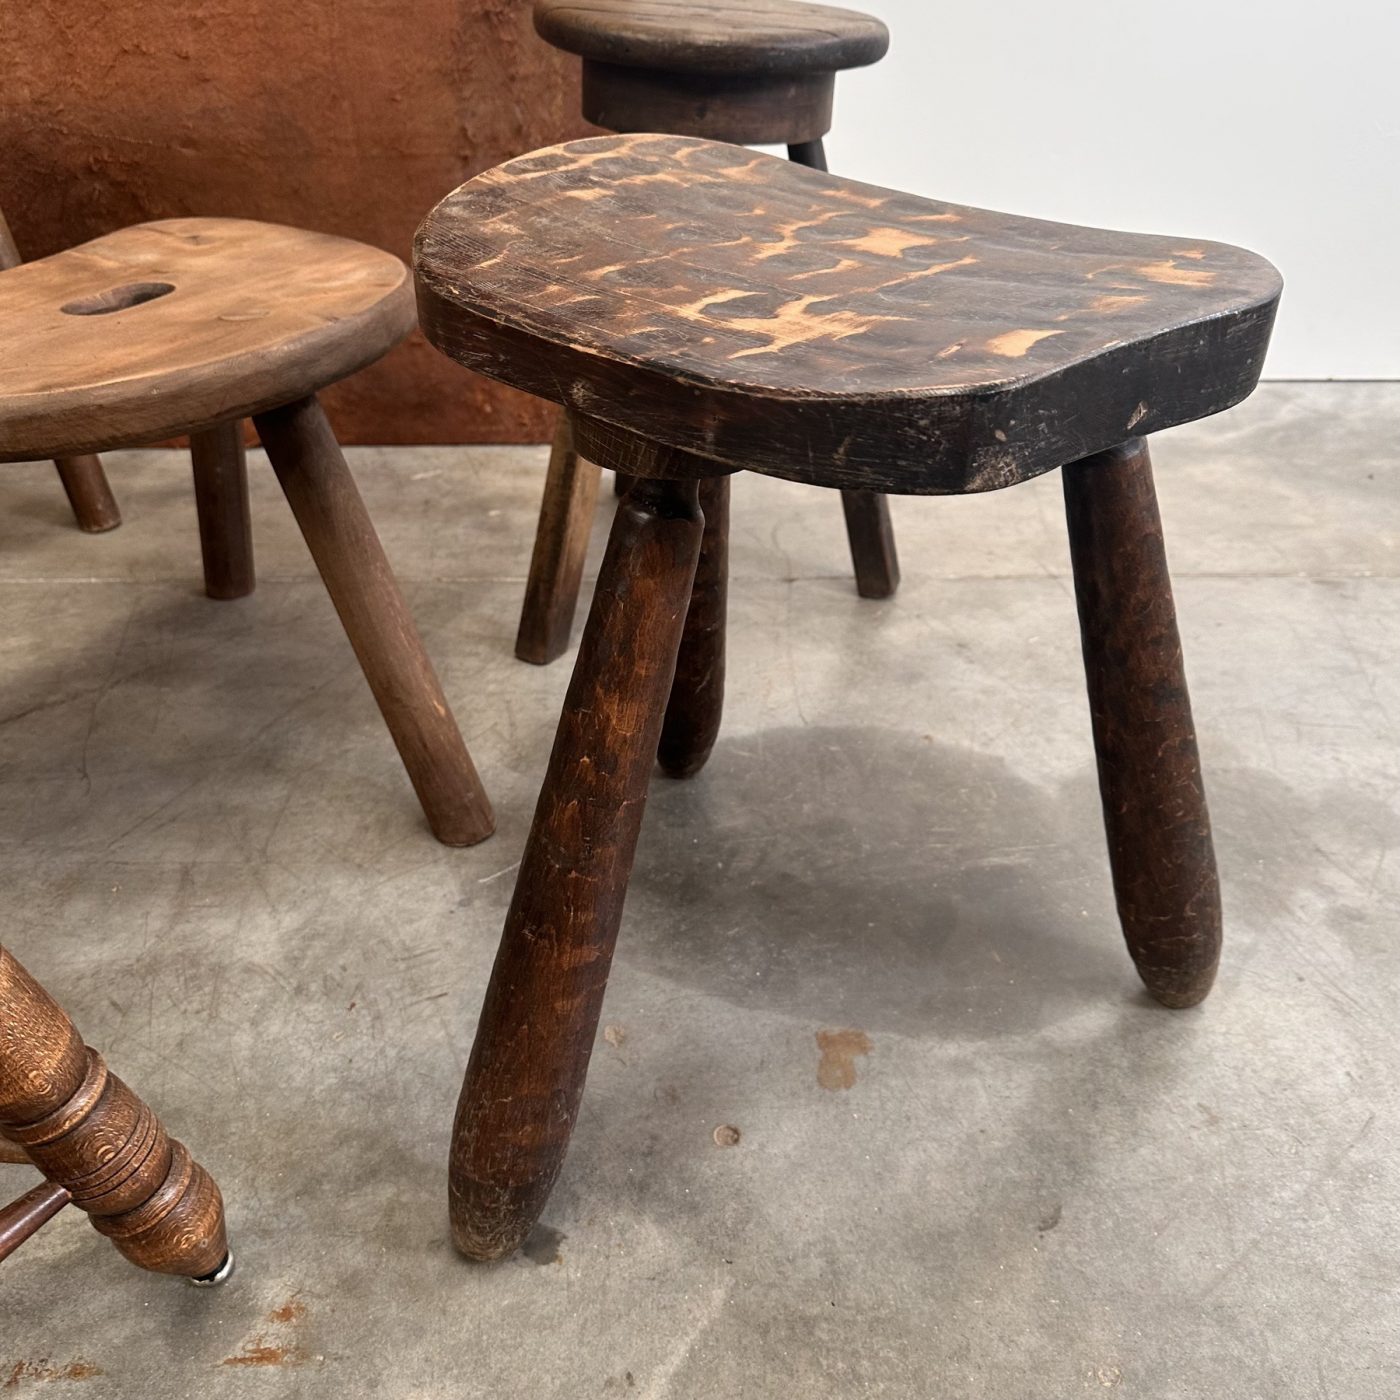 objet-vagabond-stool-collection0005